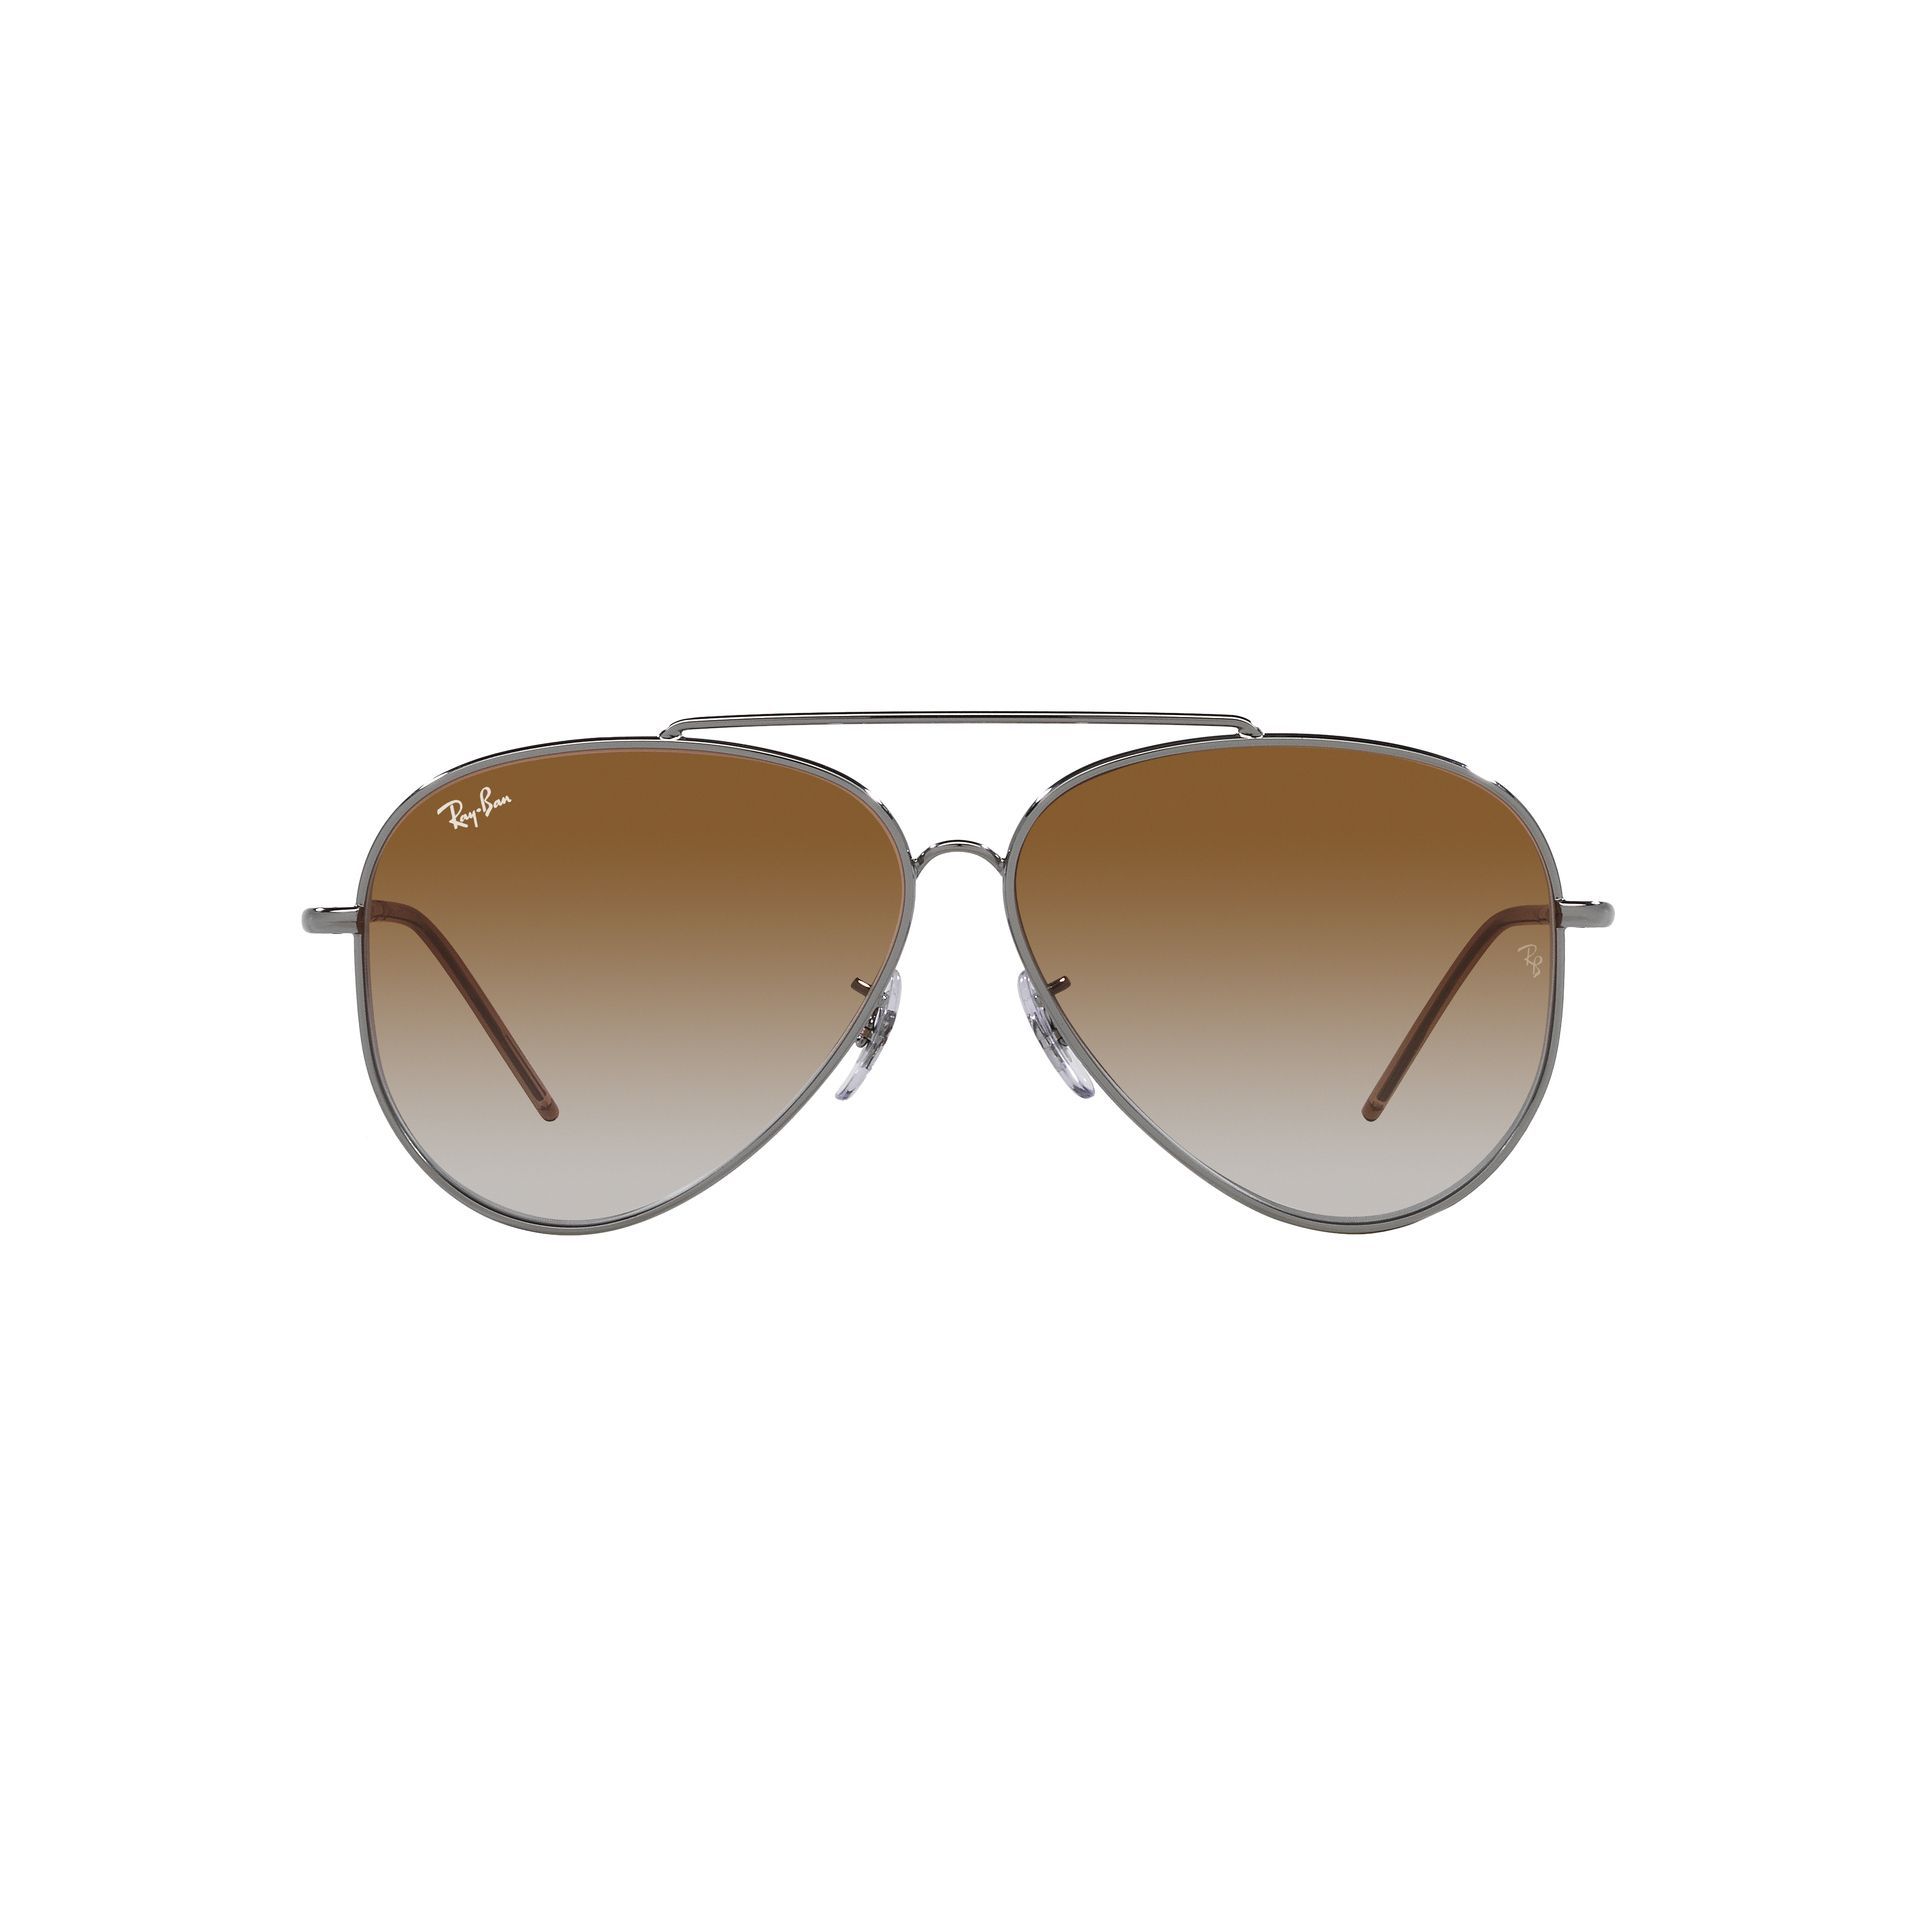 0RBR0101S Pilot Sunglasses 004 CB - size 59